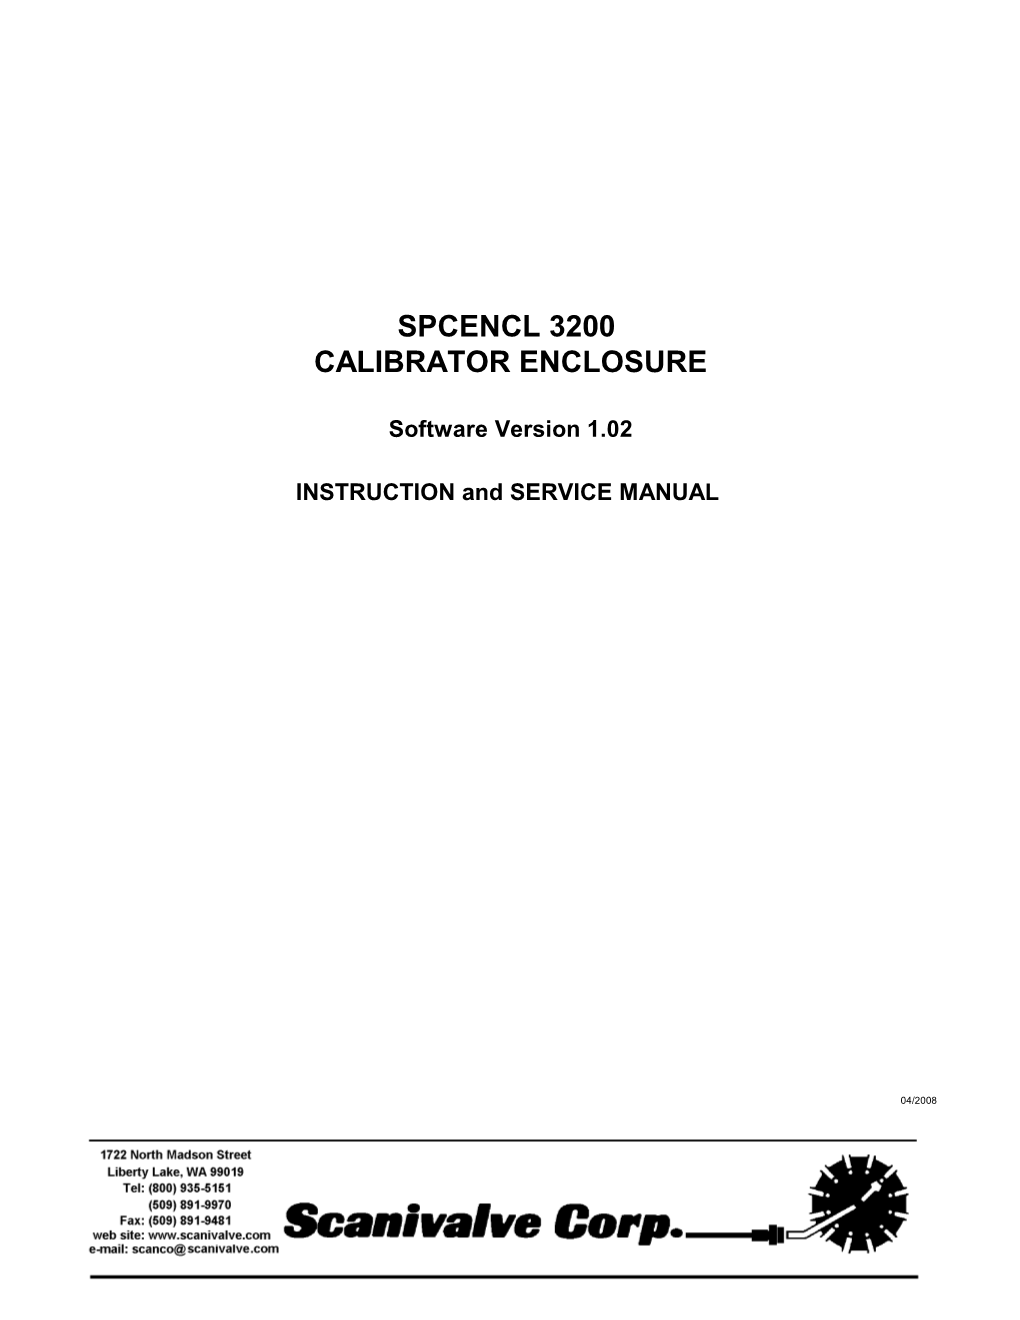 SPCENCL3200 V1.02 Software Manual